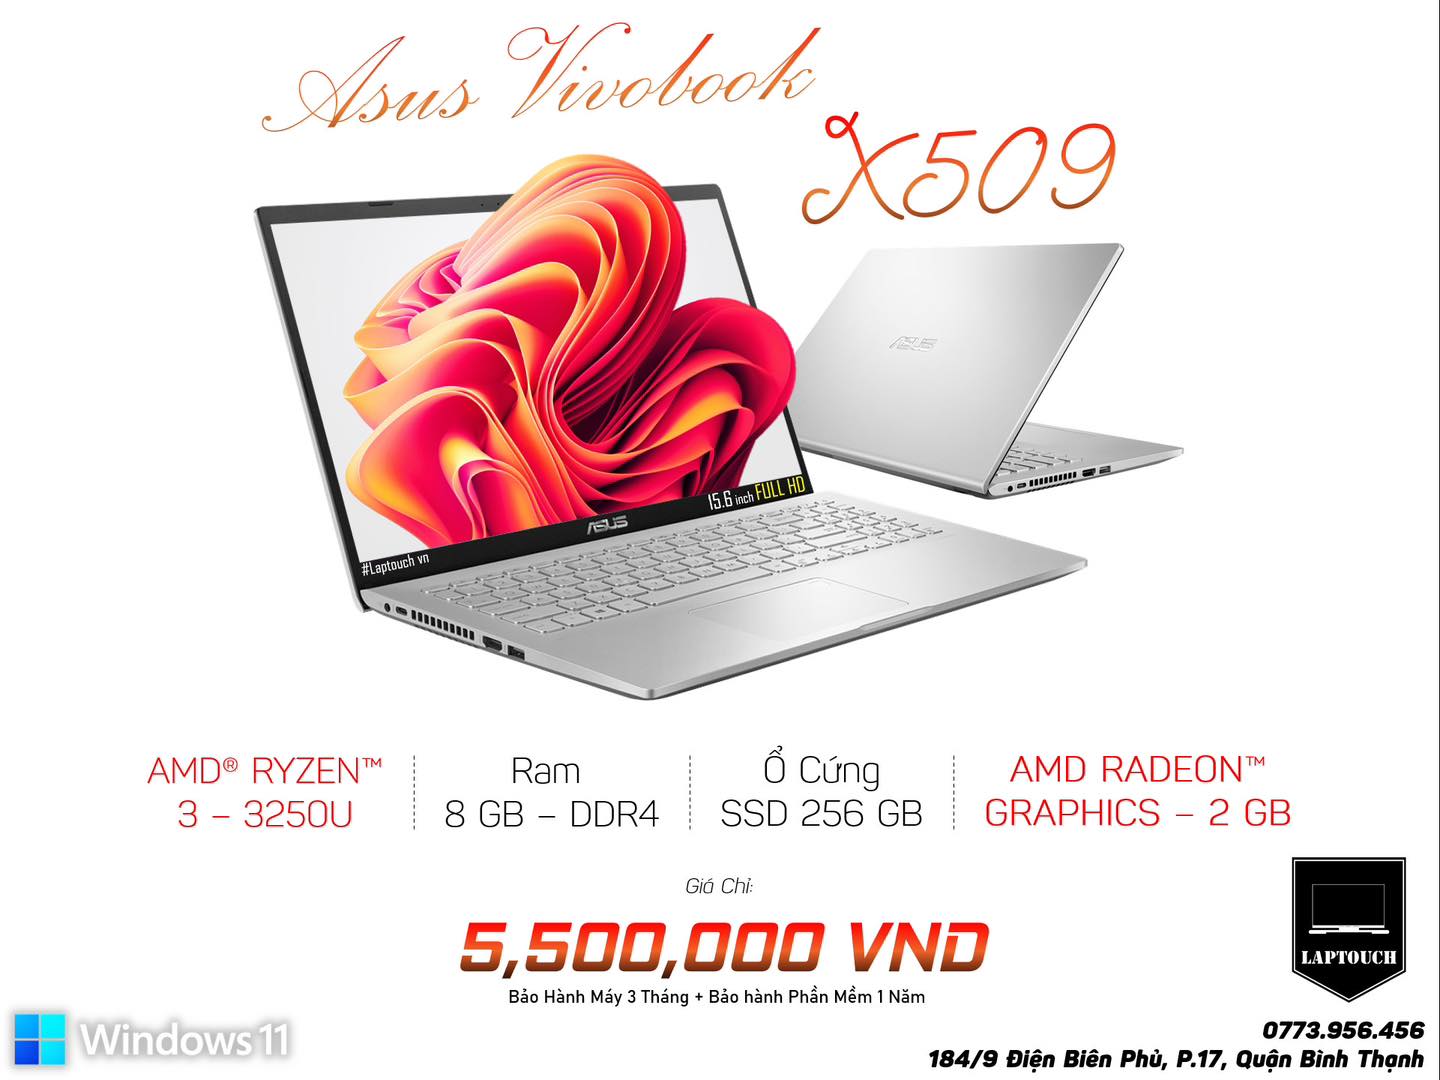 Asus Vivobook X509